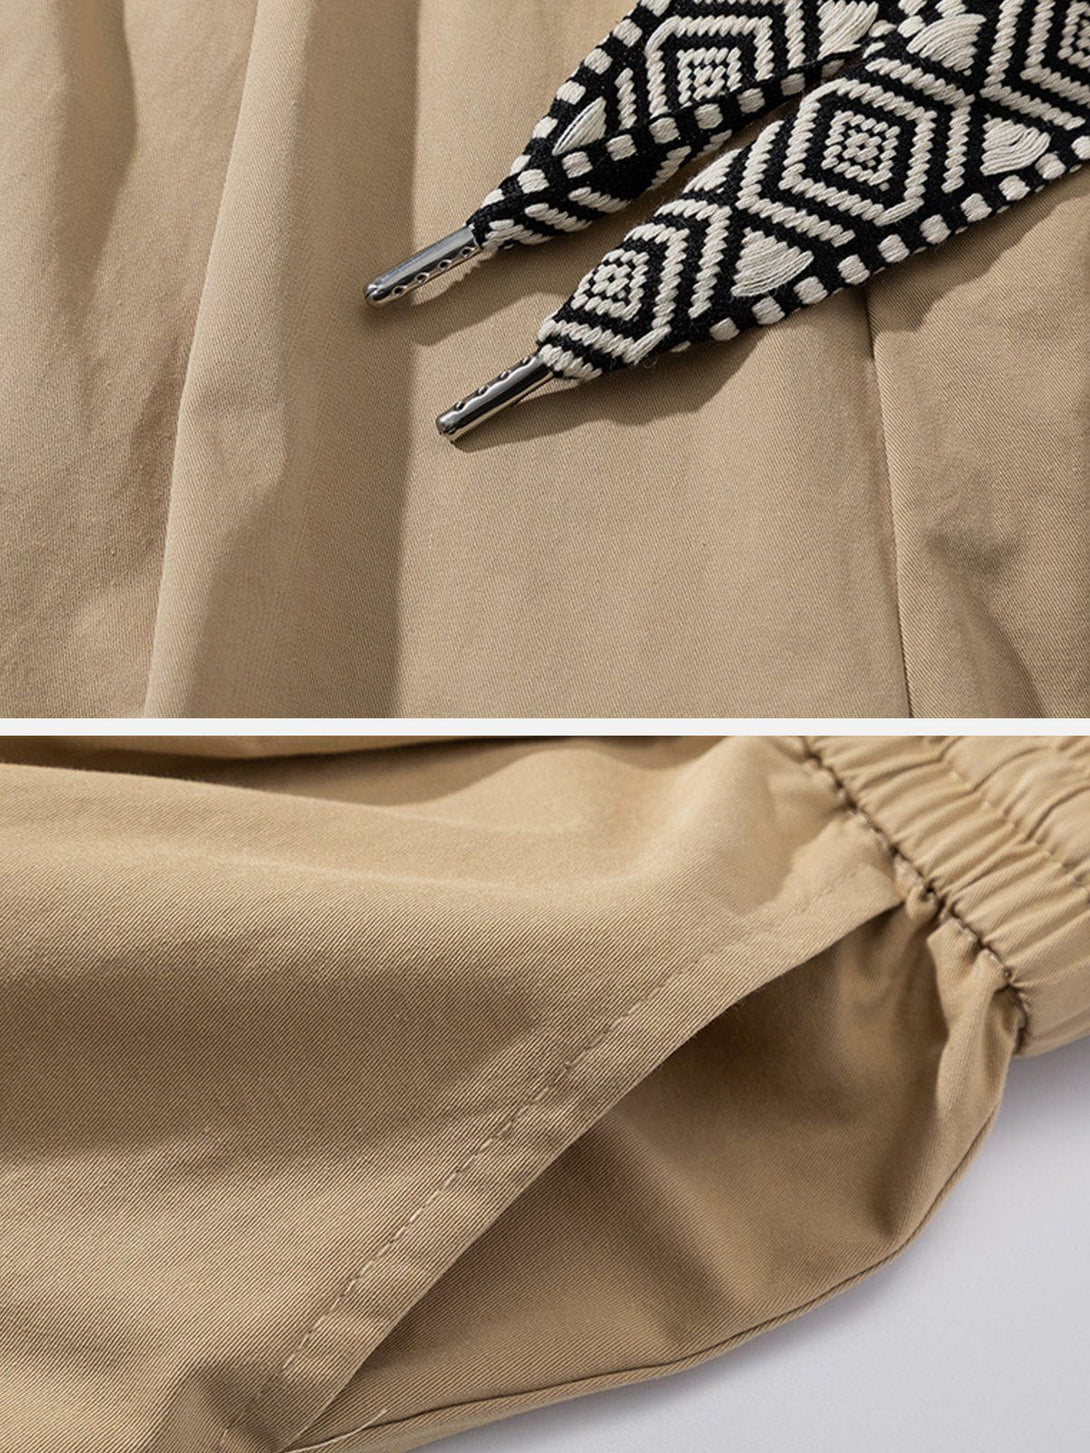 Majesda® - Multi-Pocket Straight Cargo Pants outfit ideas streetwear fashion